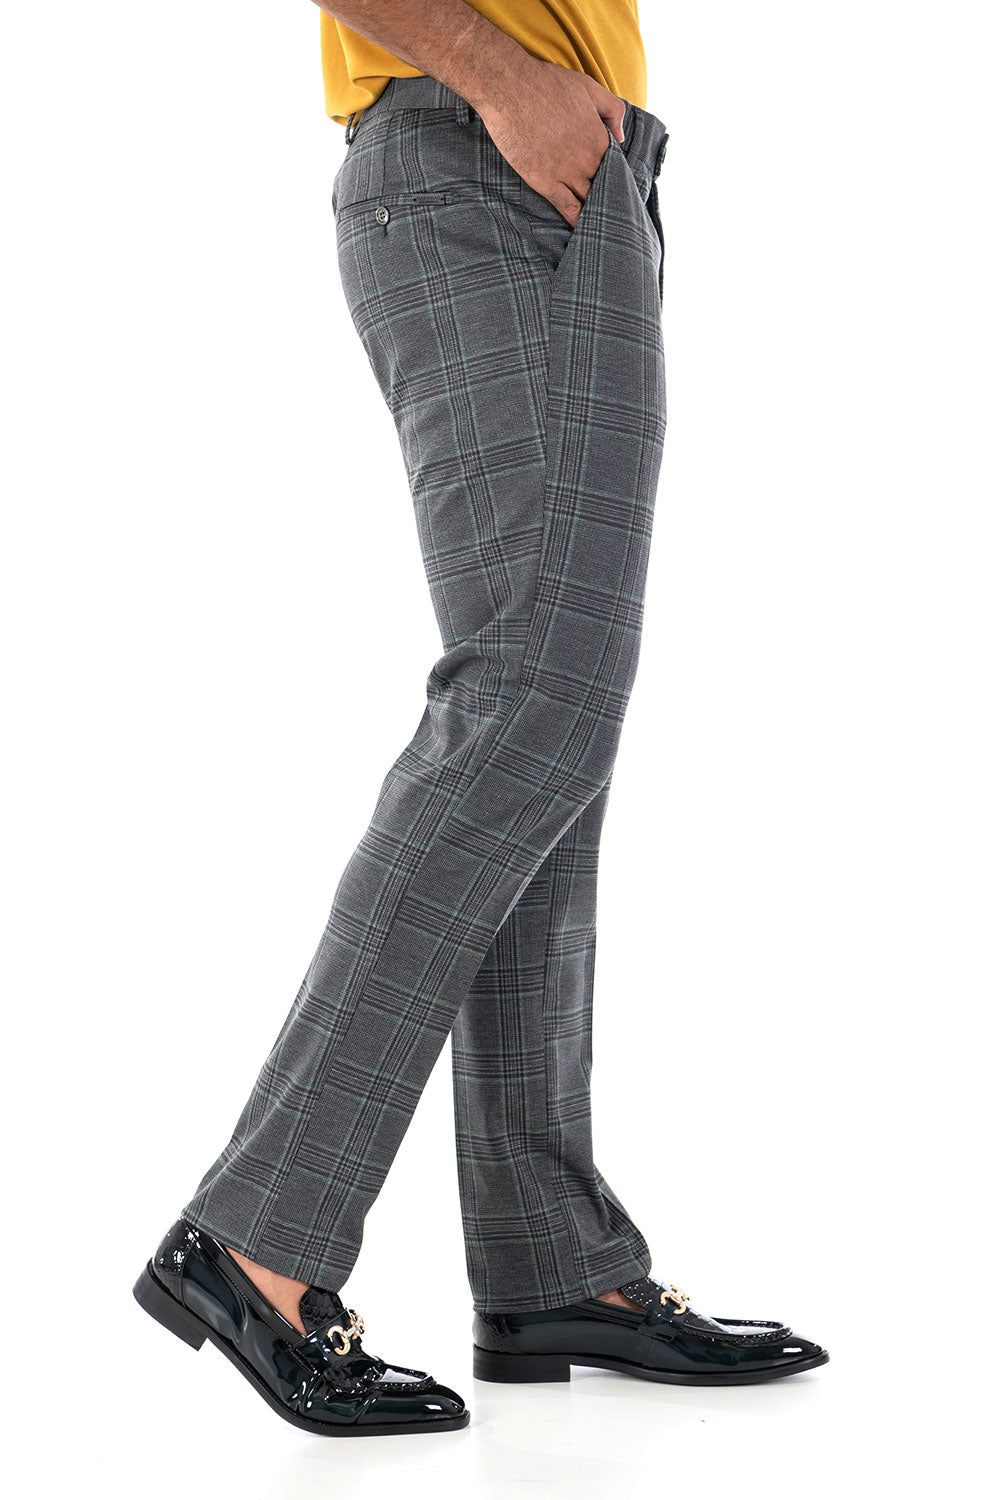 BARABAS men's checkered plaid black grey chino pants CP78